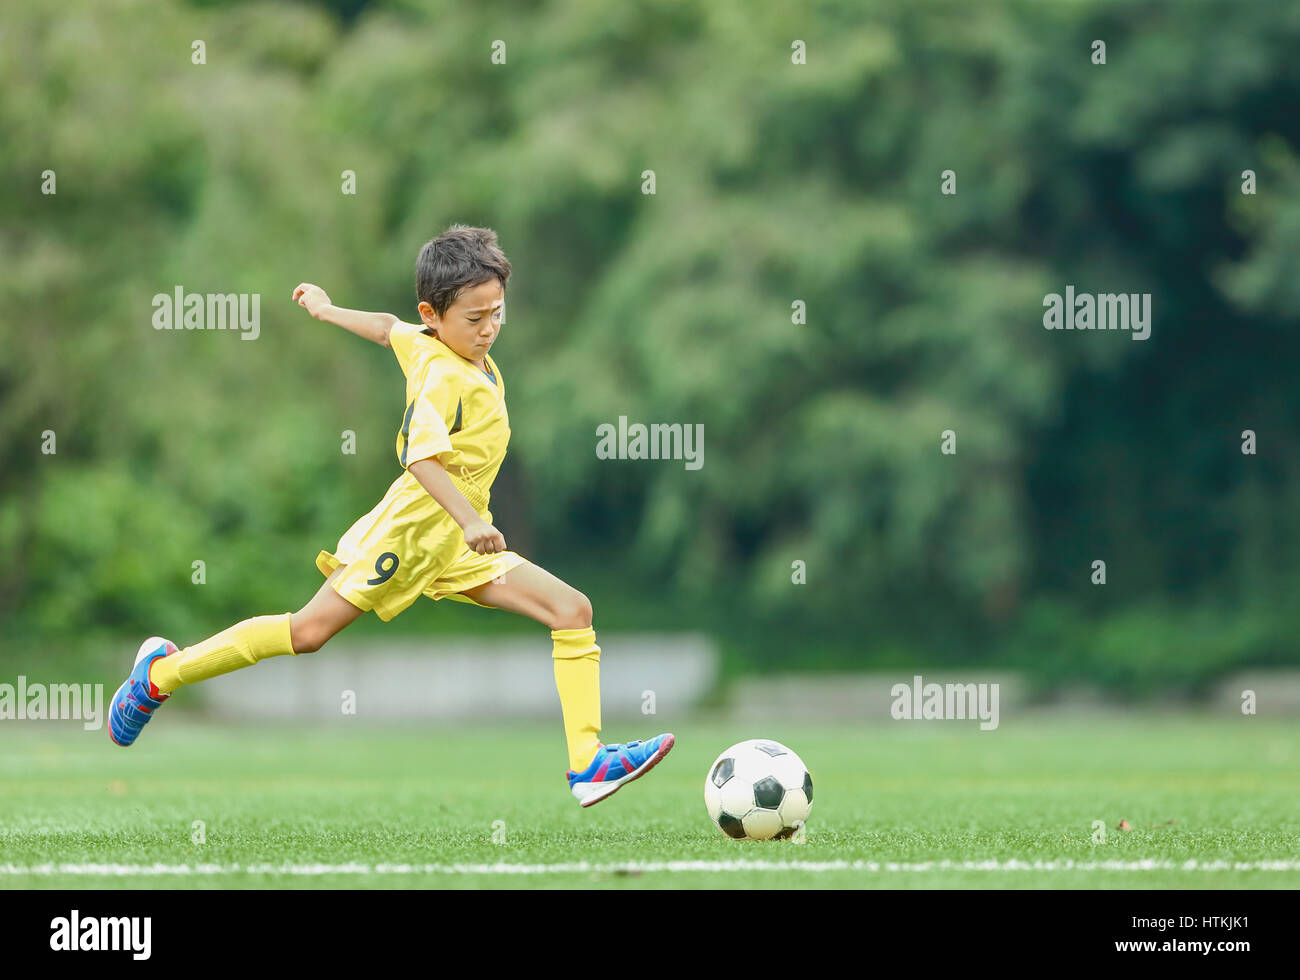 Japanese kid playing soccer Stock Photo